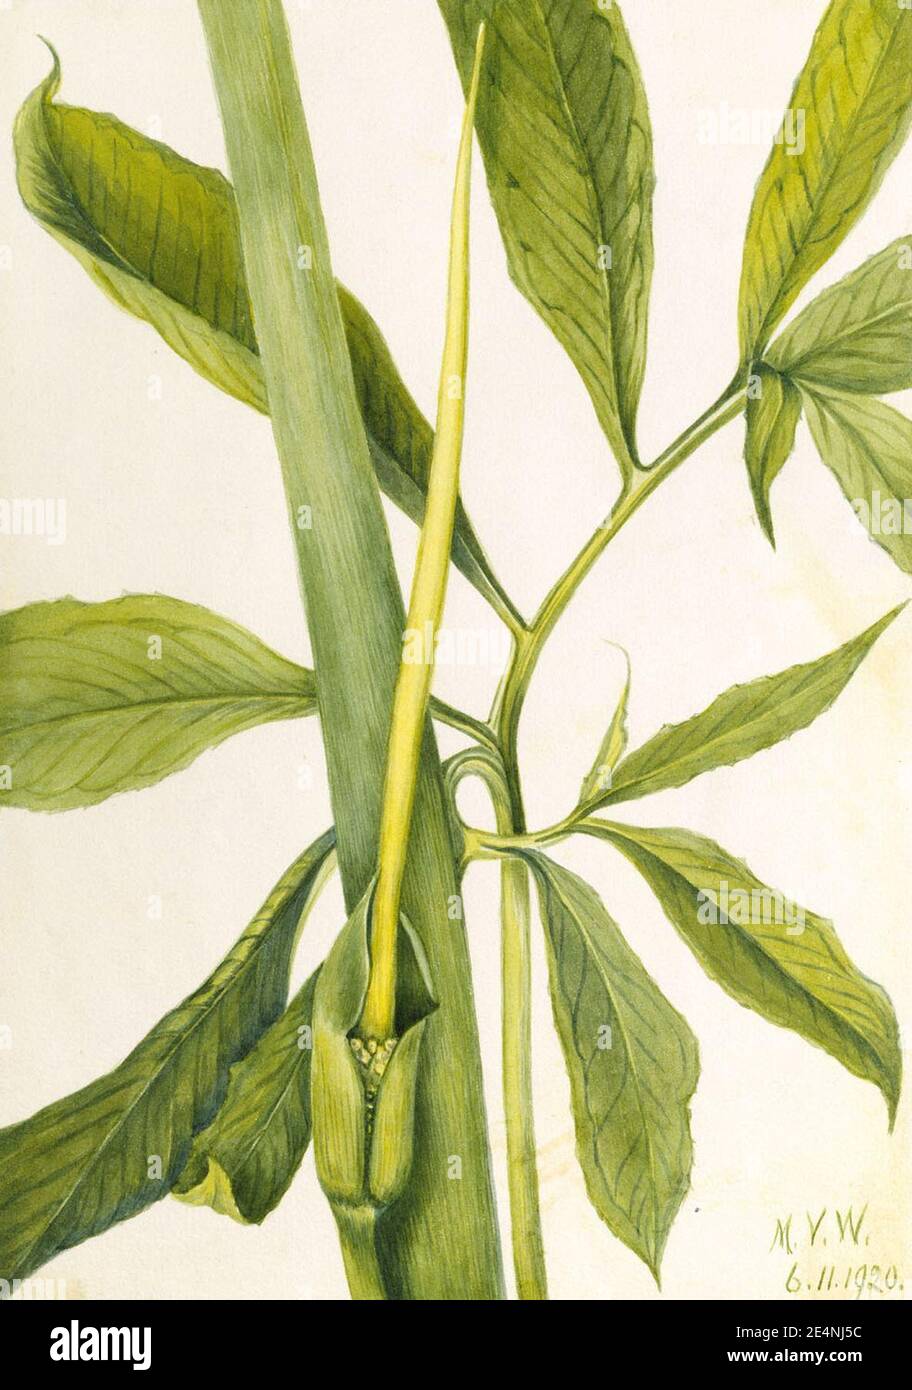 Mary Vaux Walcott - Greendragon (Arisaema dracontium) Stock Photo